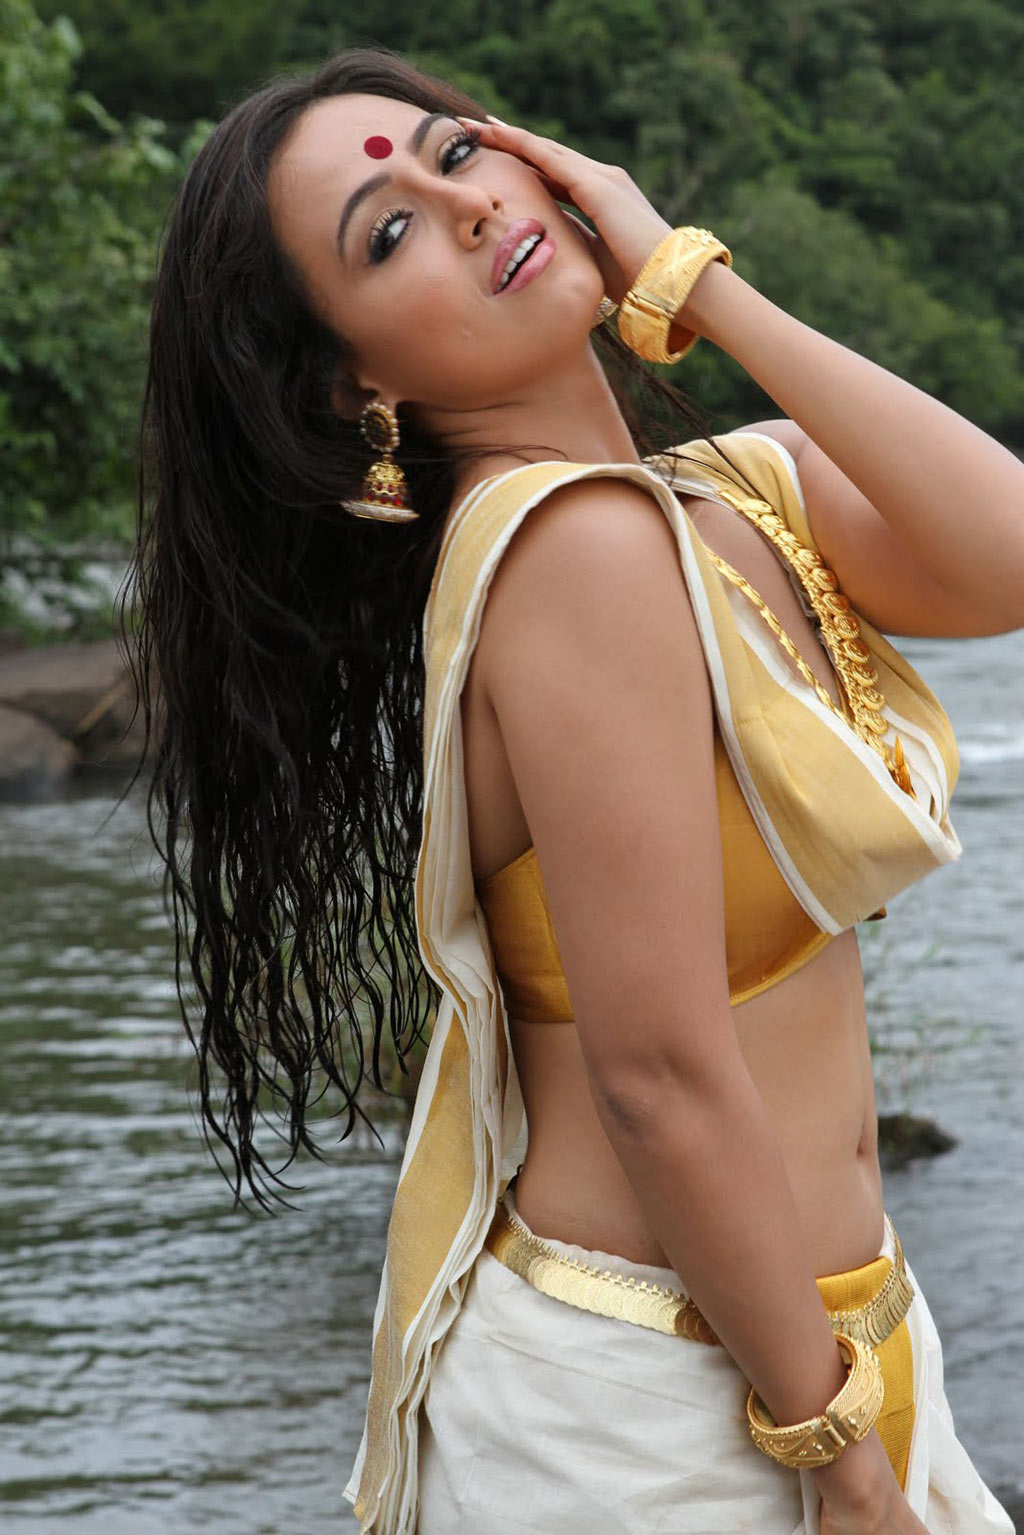 Sana Khan Hot Photos In Nadigayin Diary Movie Actress Wallpapers Hot Wallpapers Latest